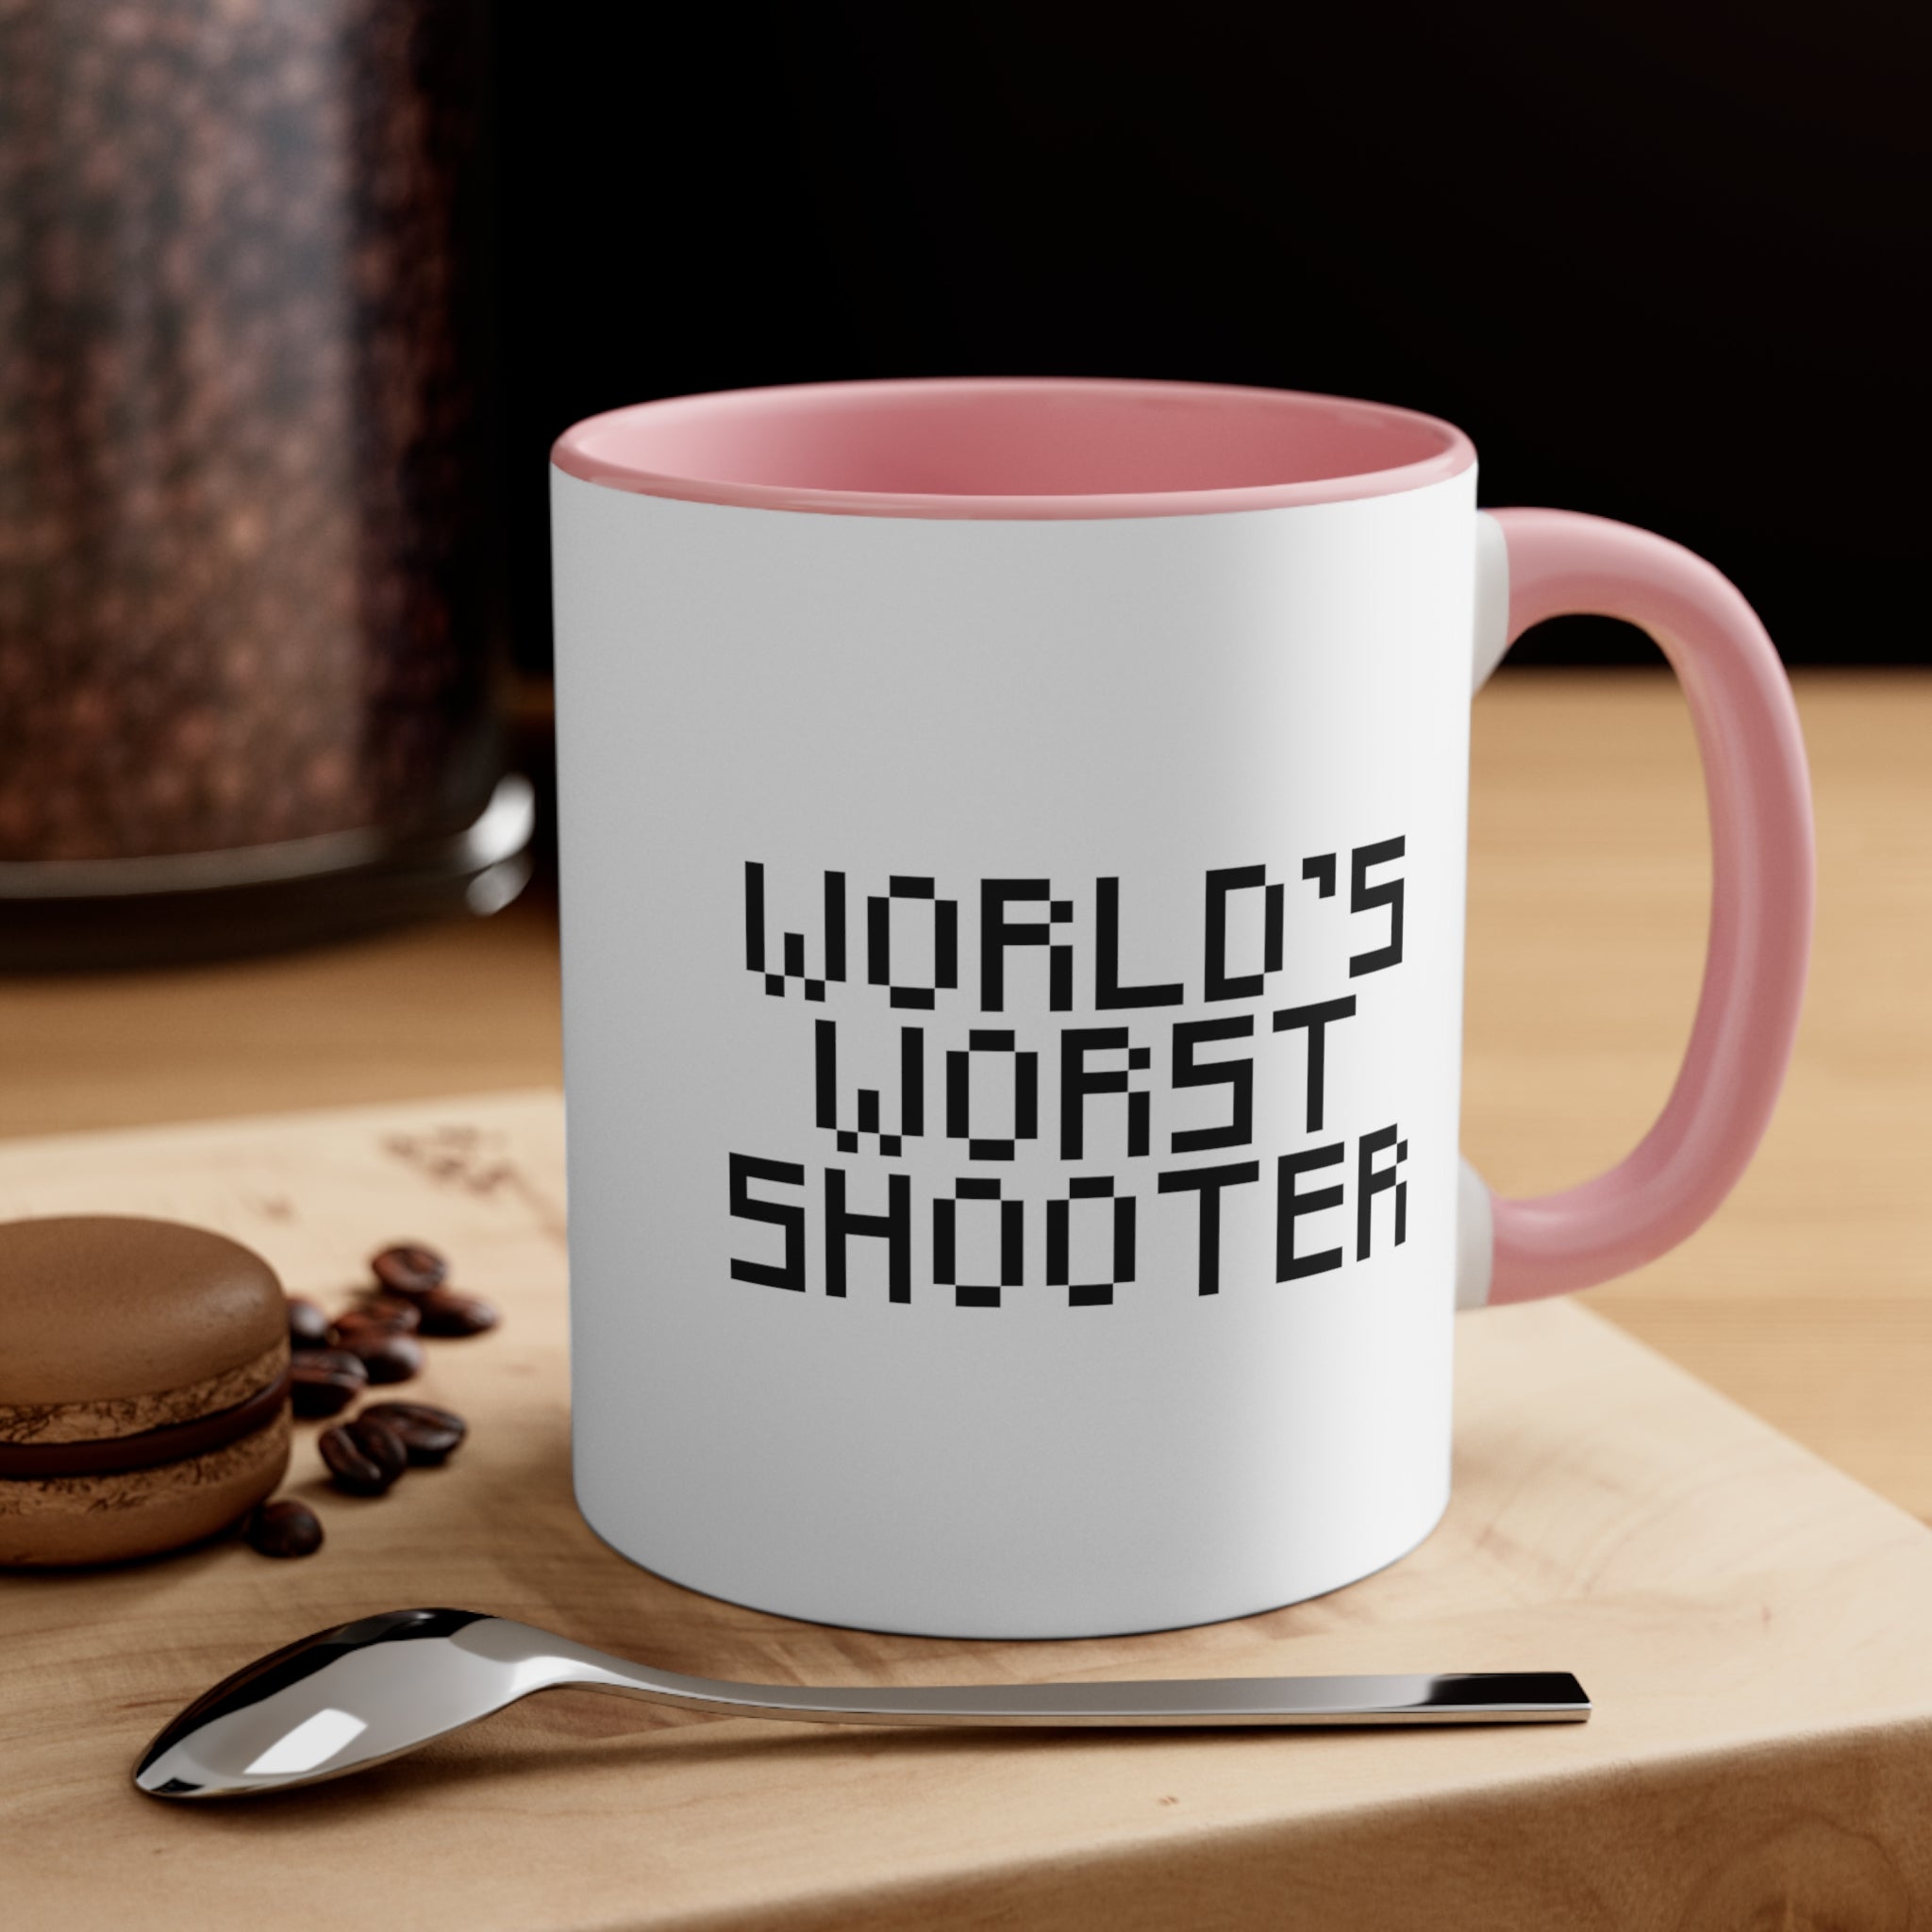 World's Worst Shooter Accent Coffee Mug, 11oz